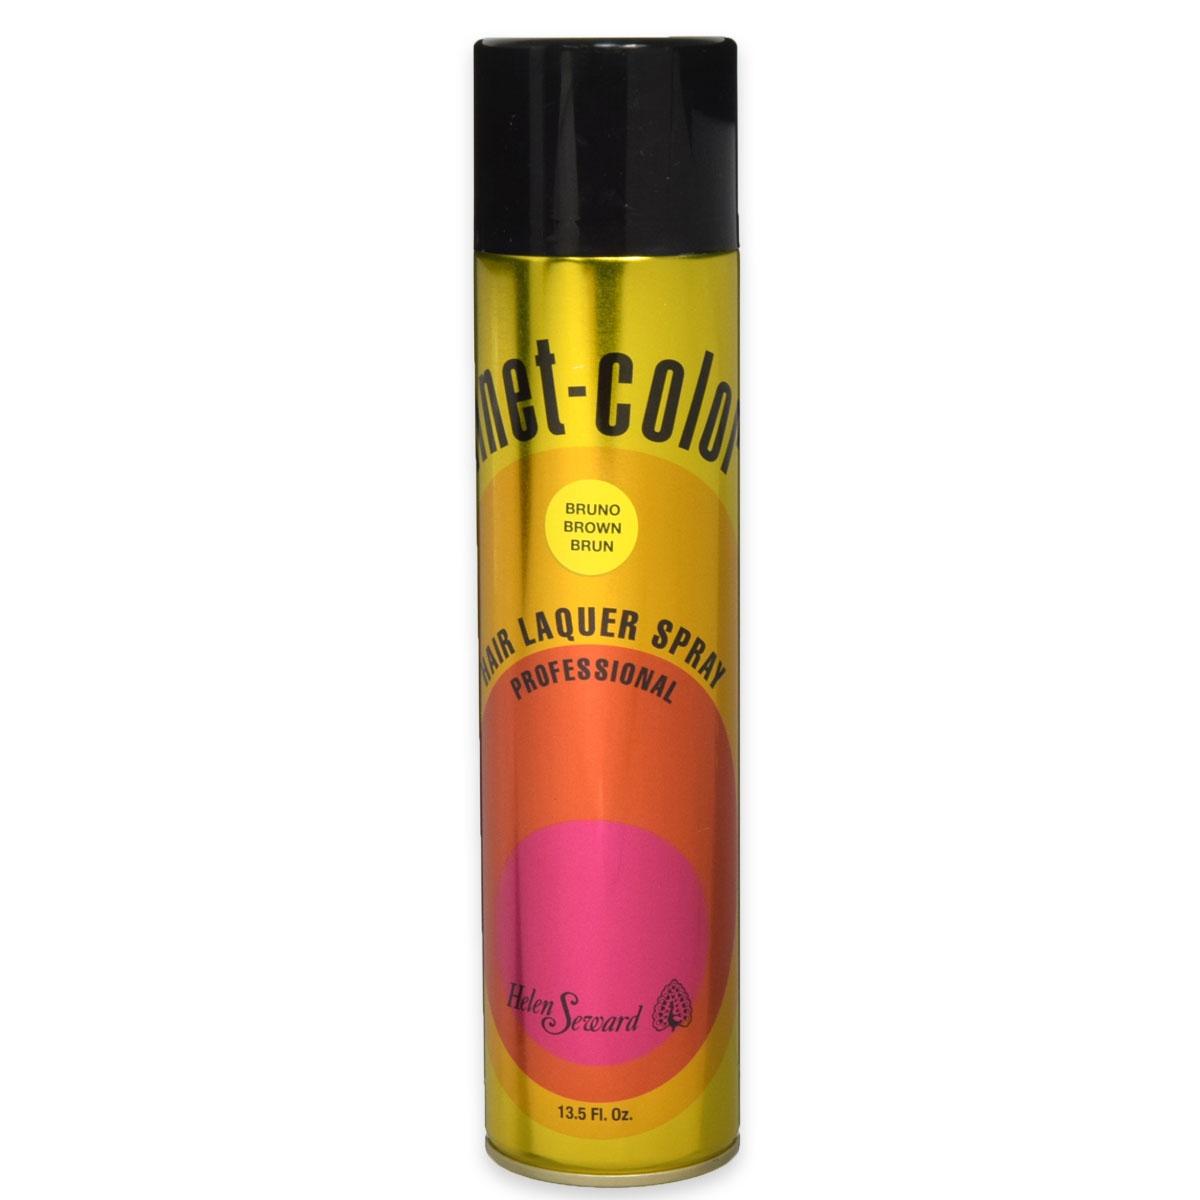 Helen Seward - Hair laquer spray Bruno 400 ml